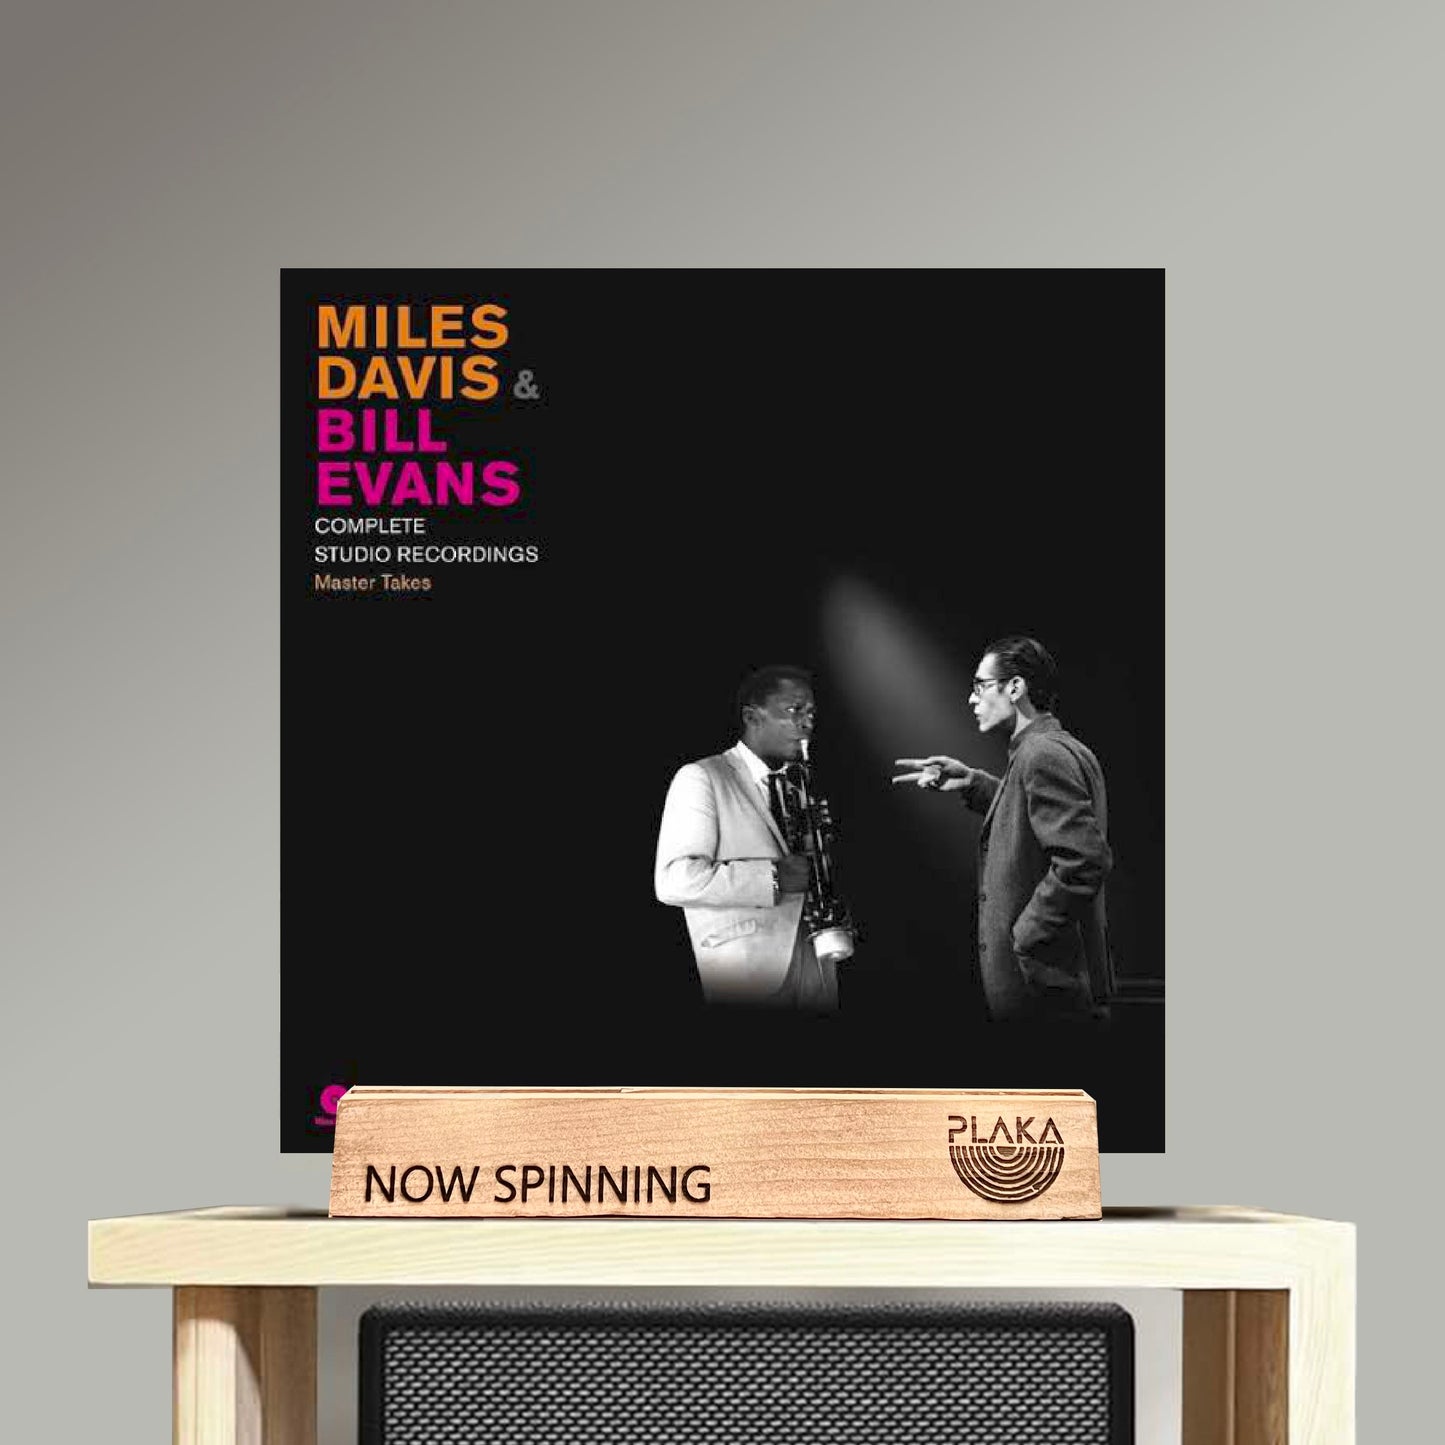 Miles Davis & Bill Evans - Complete Studio Recordings: Master Takes